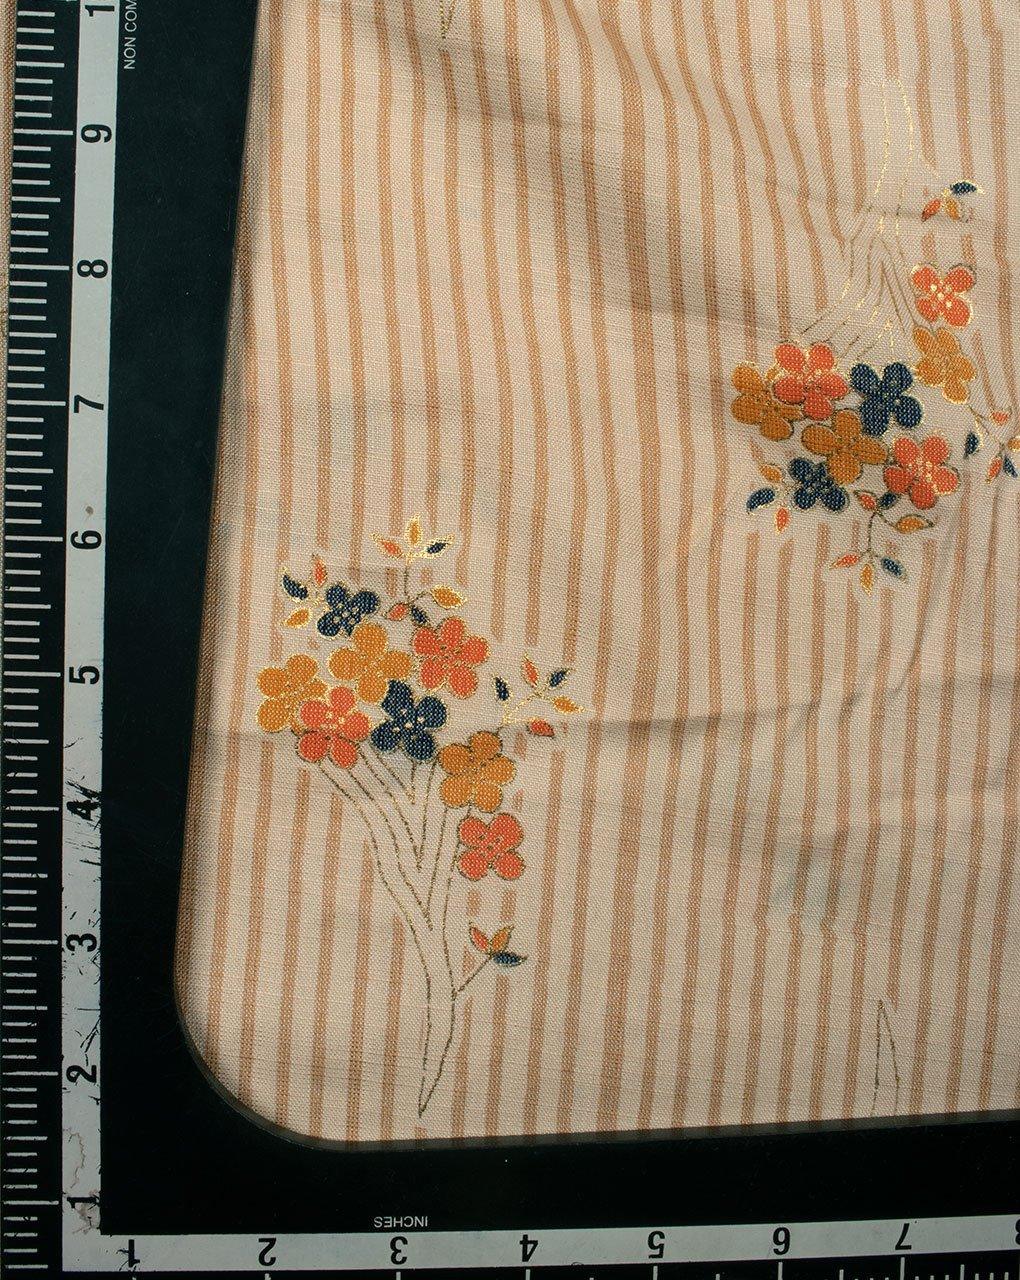 ( Pre-Cut 1 MTR ) Beige Gold Floral Pattern Foil Screen Print Slub Rayon Fabric - Fabriclore.com